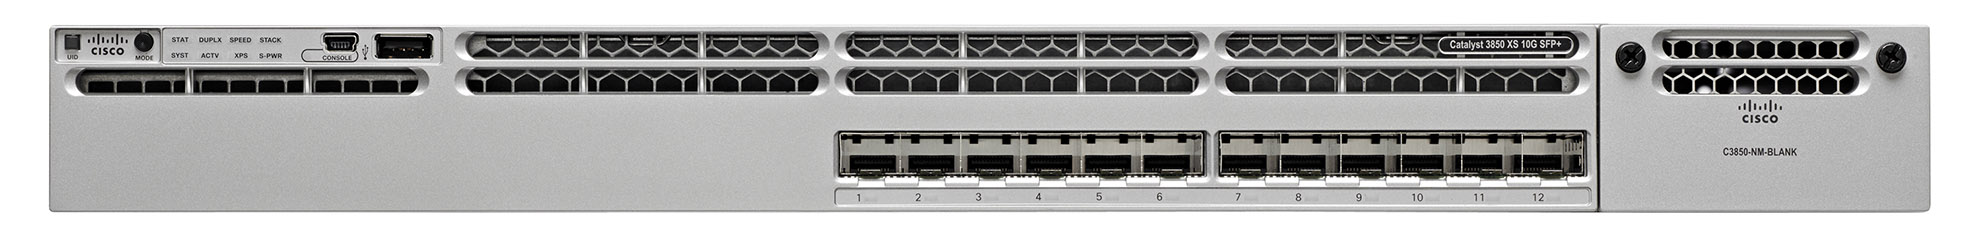 Cisco WS-C3850-12XS-S Ports